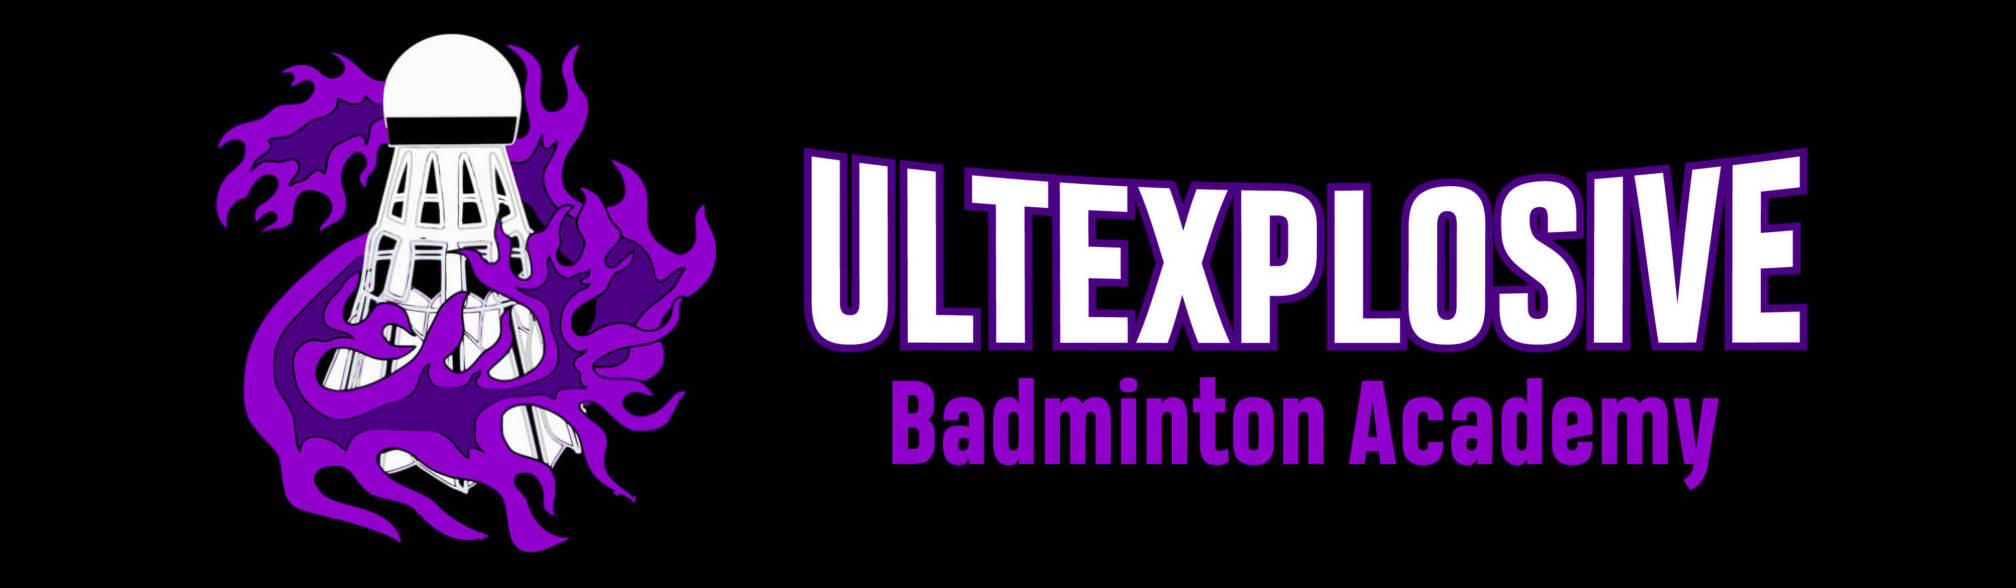 ULTexplosive Badminton Academy